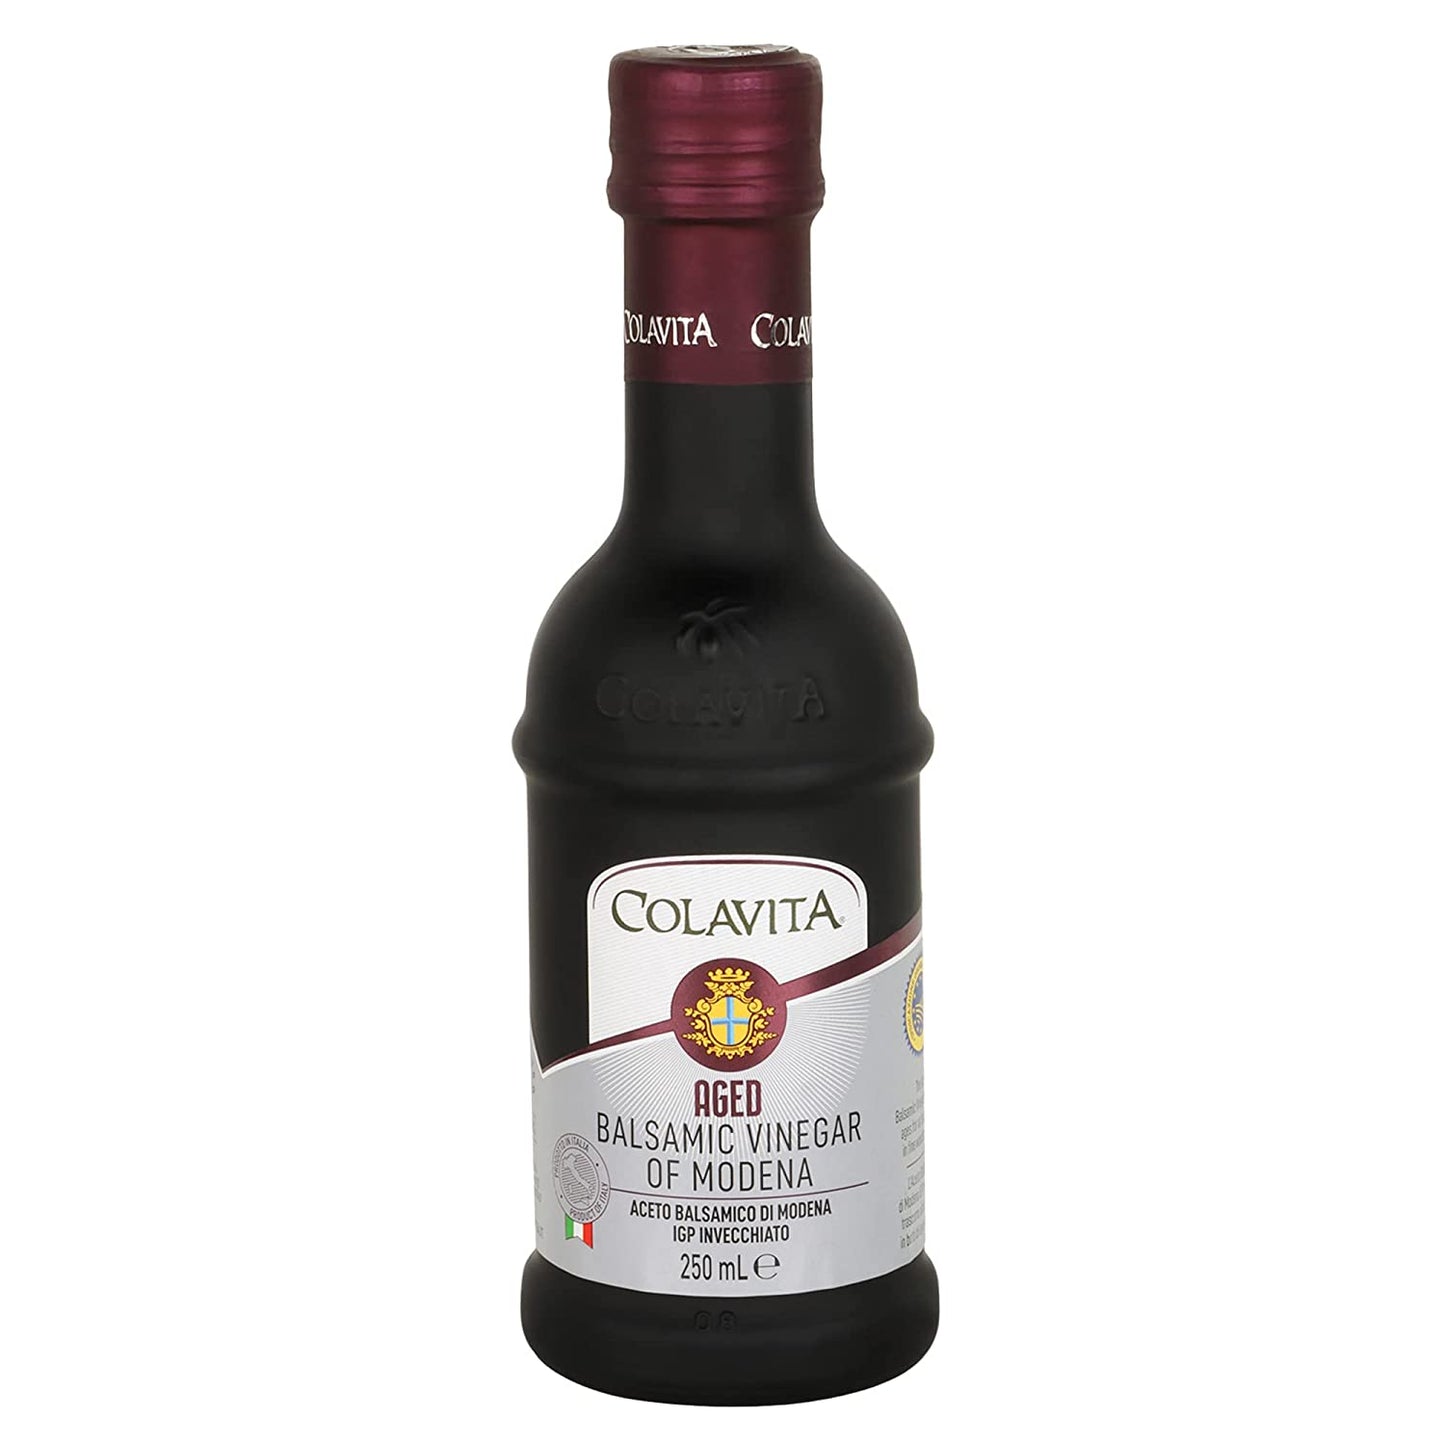 Colavita Aged Balsamic Vinegar of Modena 250 ml